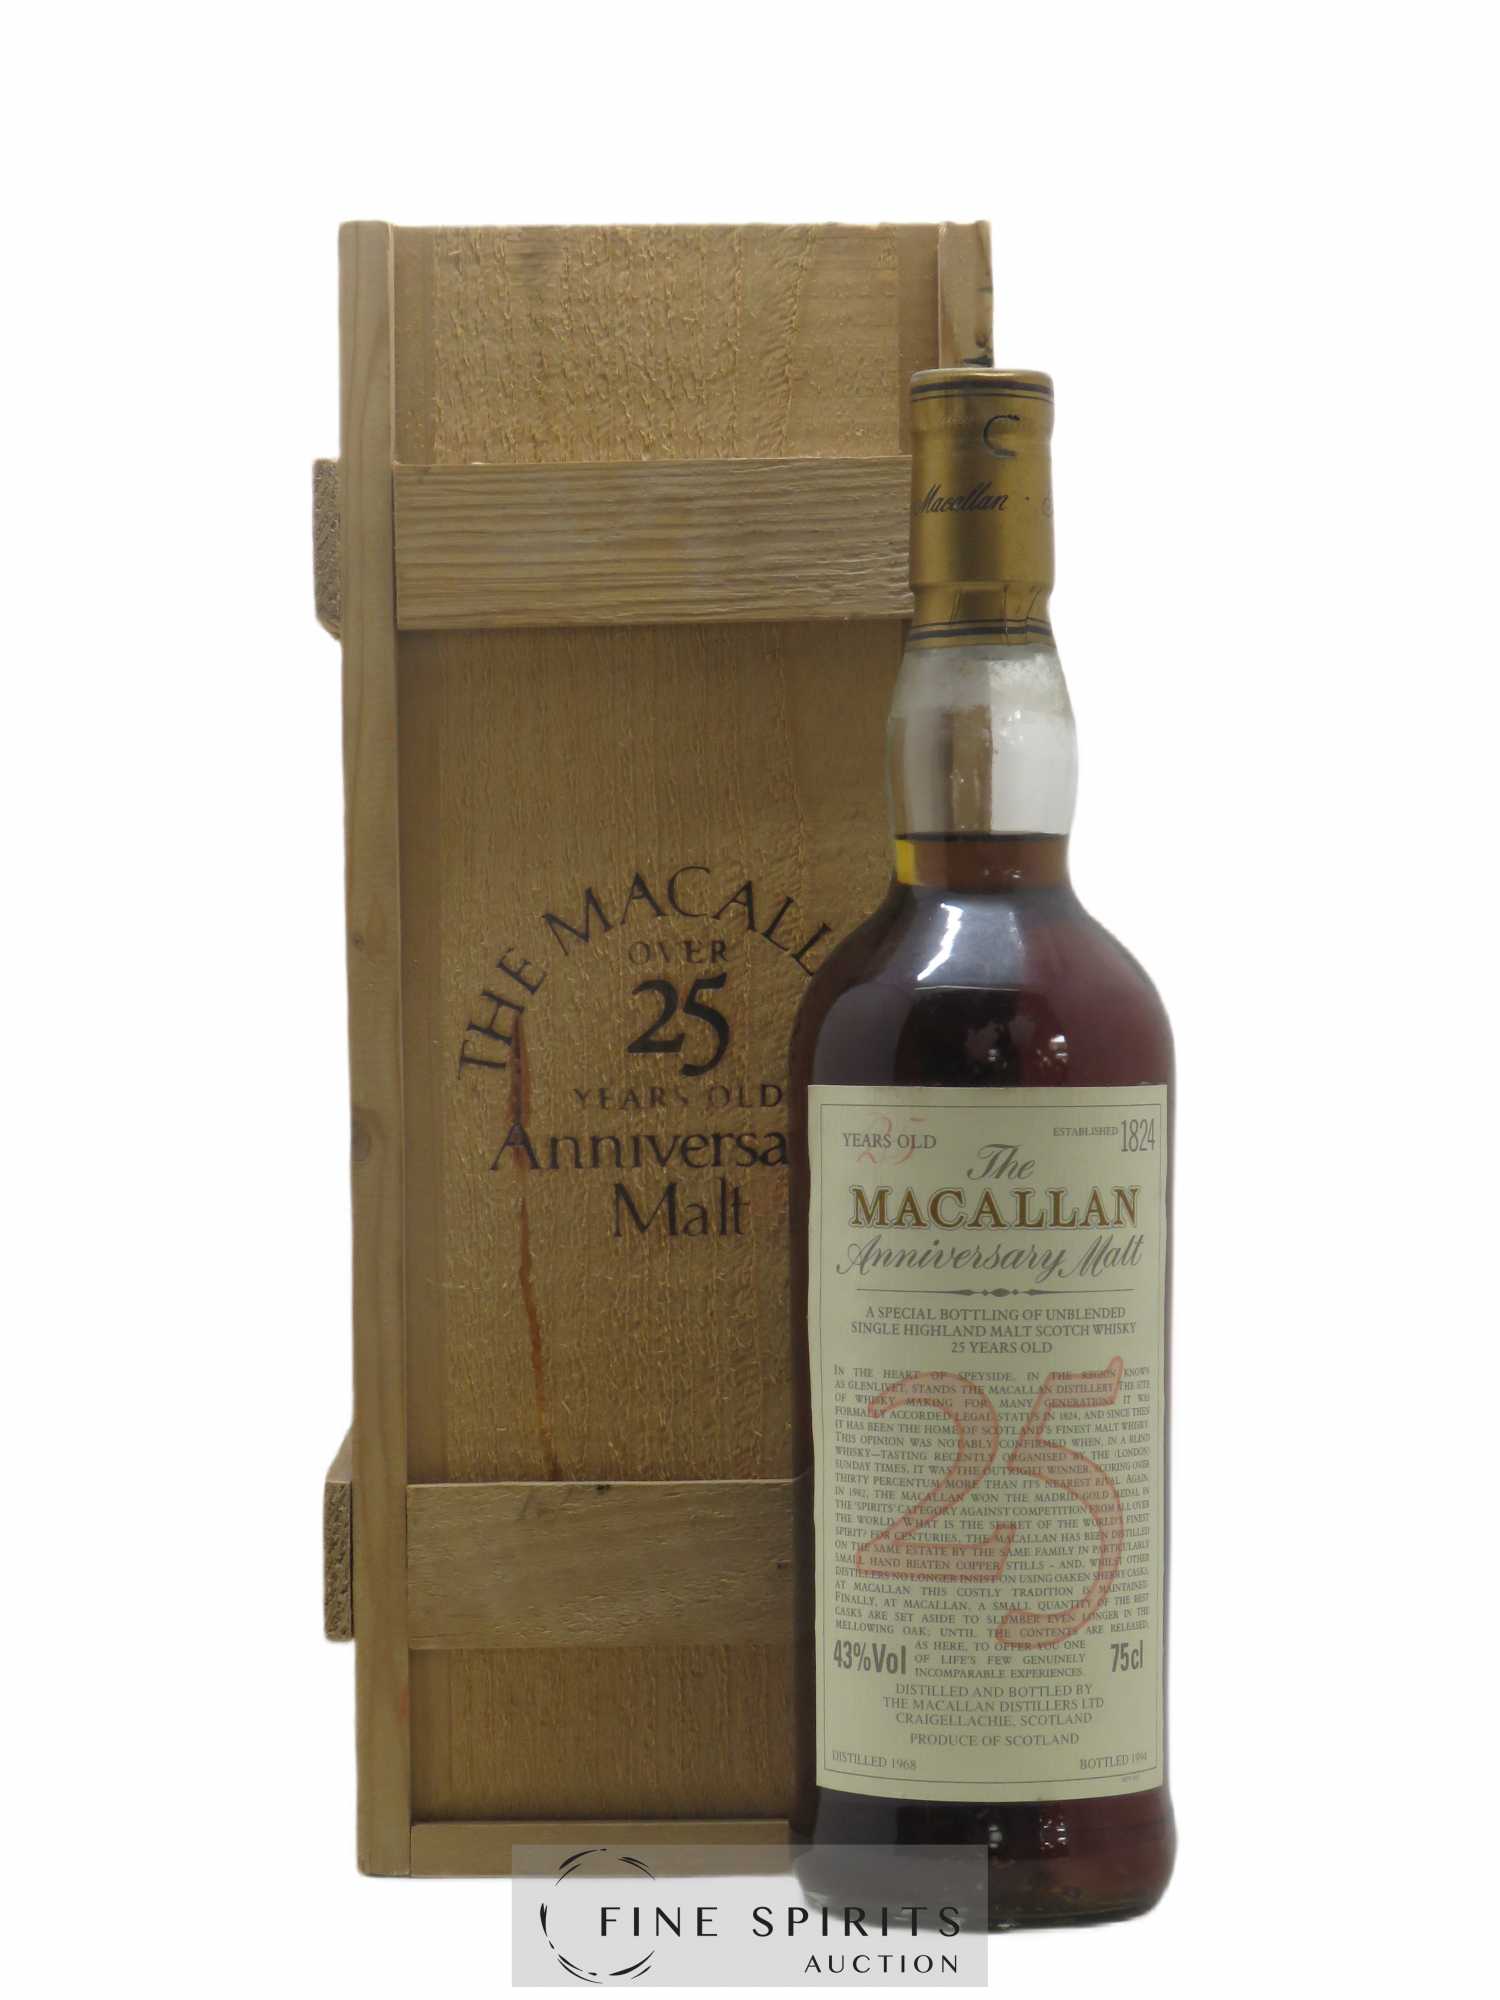 Macallan (The) 25 years 1968 Of. Anniversary Malt bottled 1994 Special Bottling